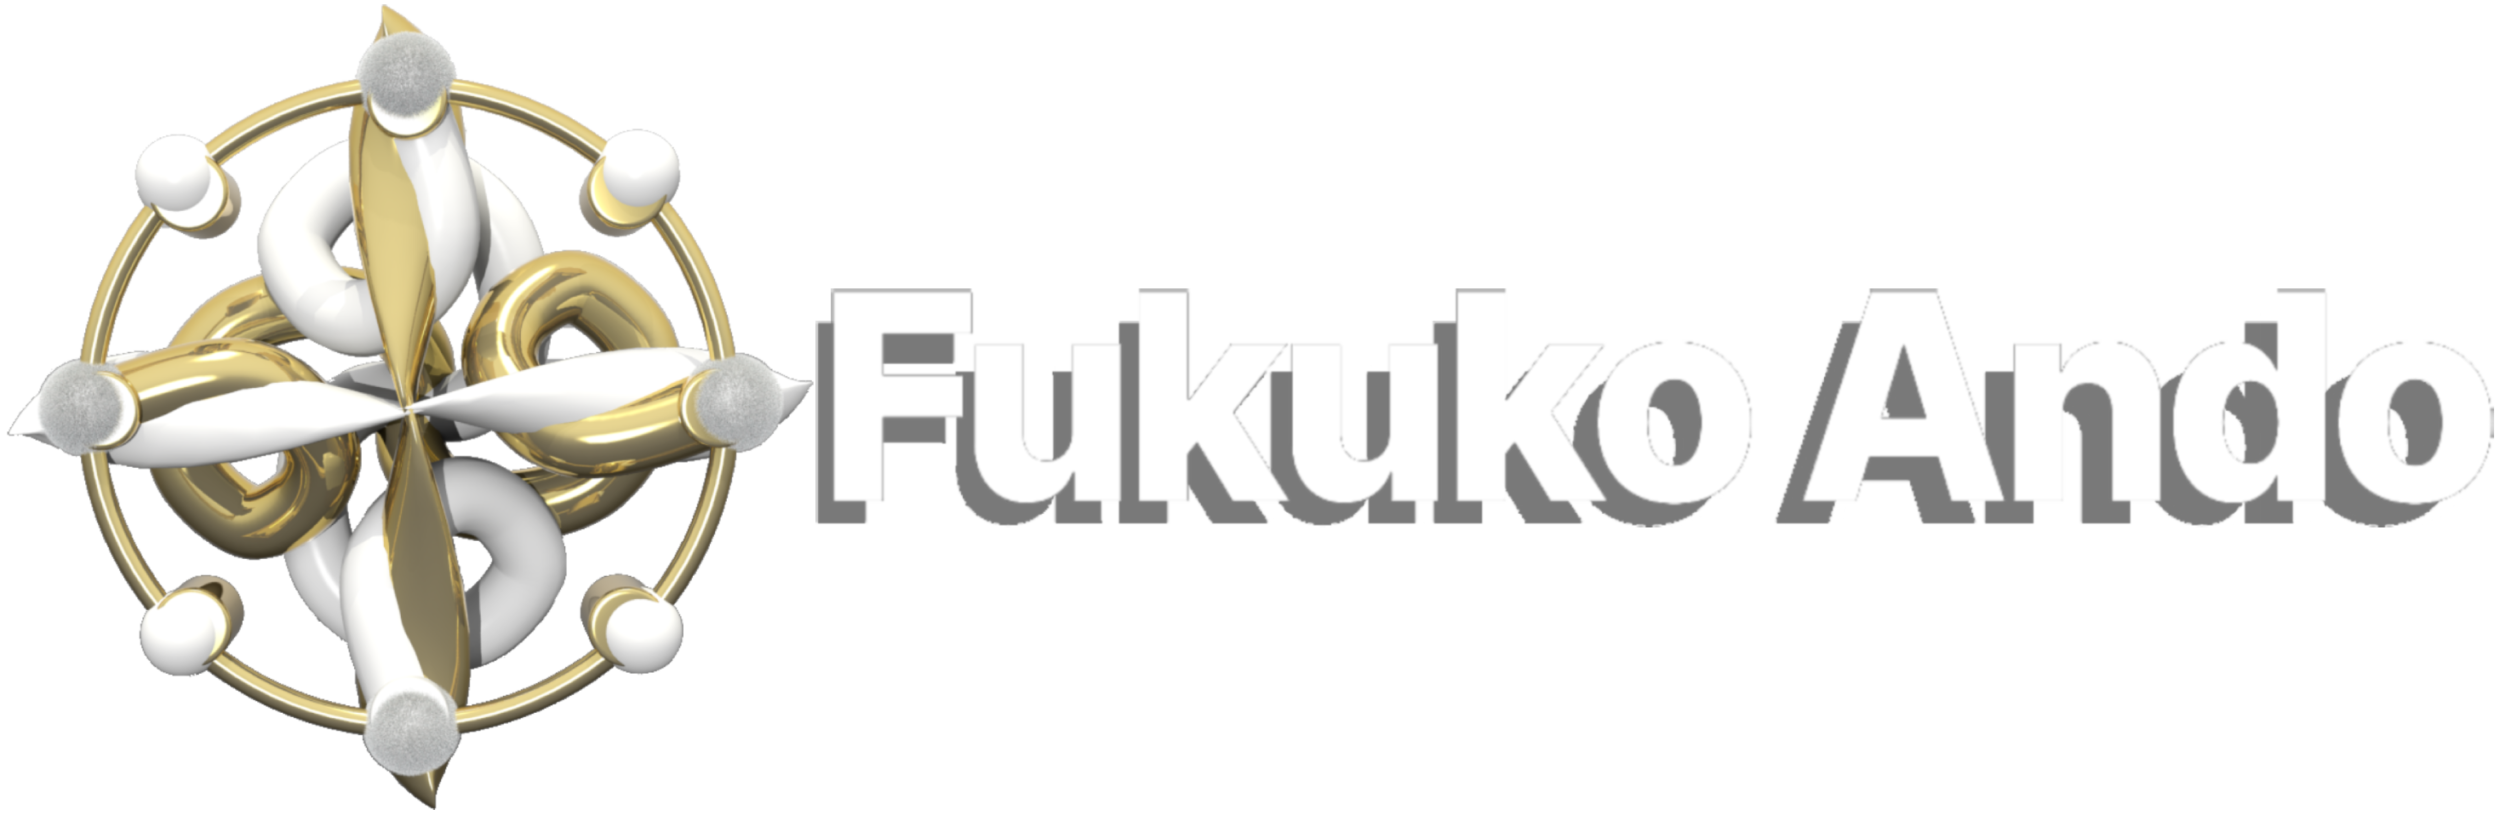 Fukuko Ando / Logo